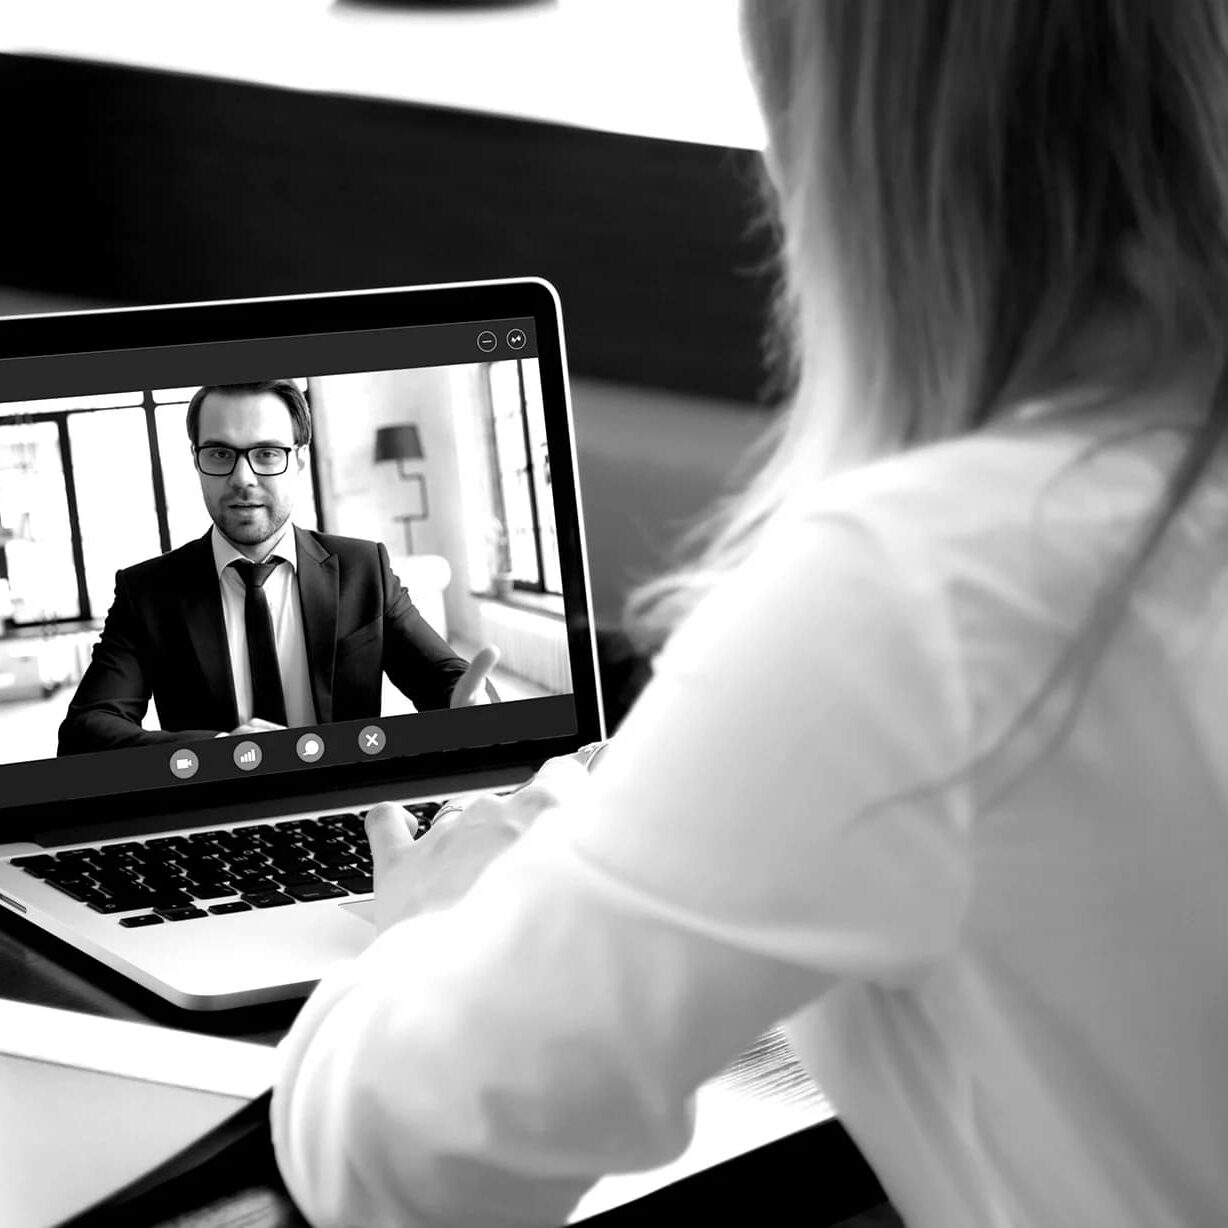 woman video calling a man on a laptop